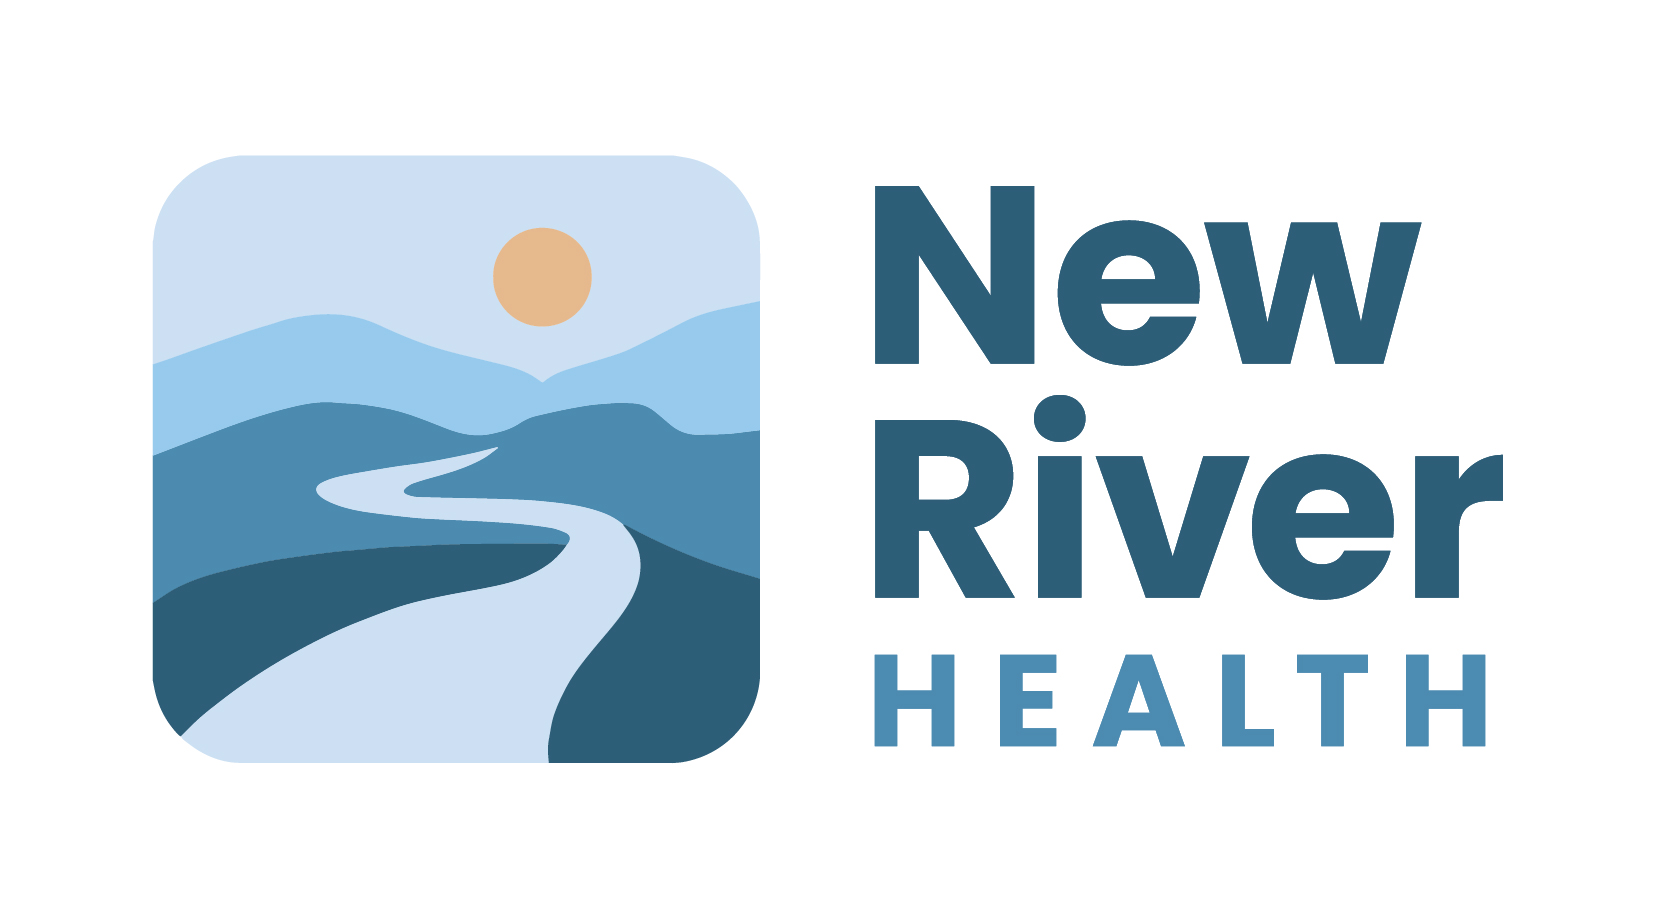 New River Health - Summersville 315 Fairview Heights Rd, Summersville West Virginia 26651